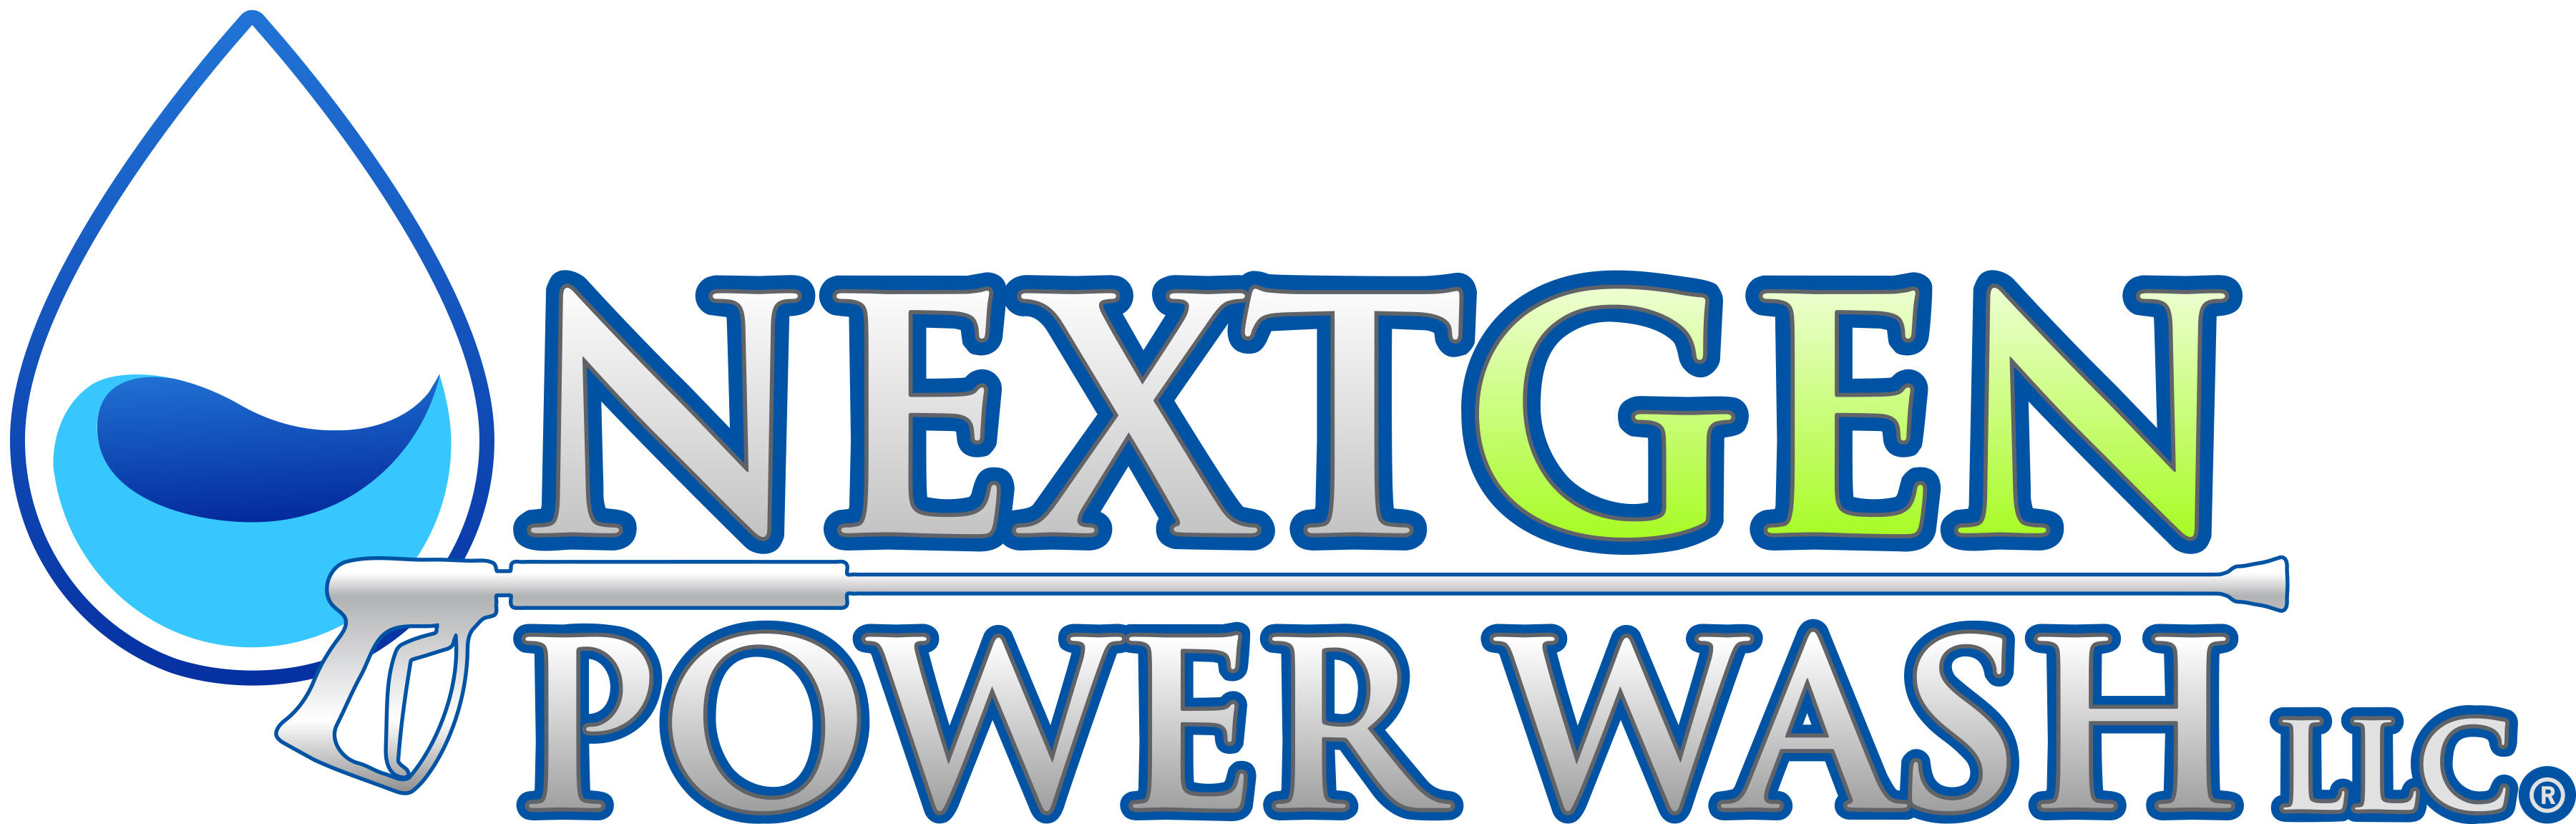 NextGen Power Wash LLC Logo Lititz Pennsylvania